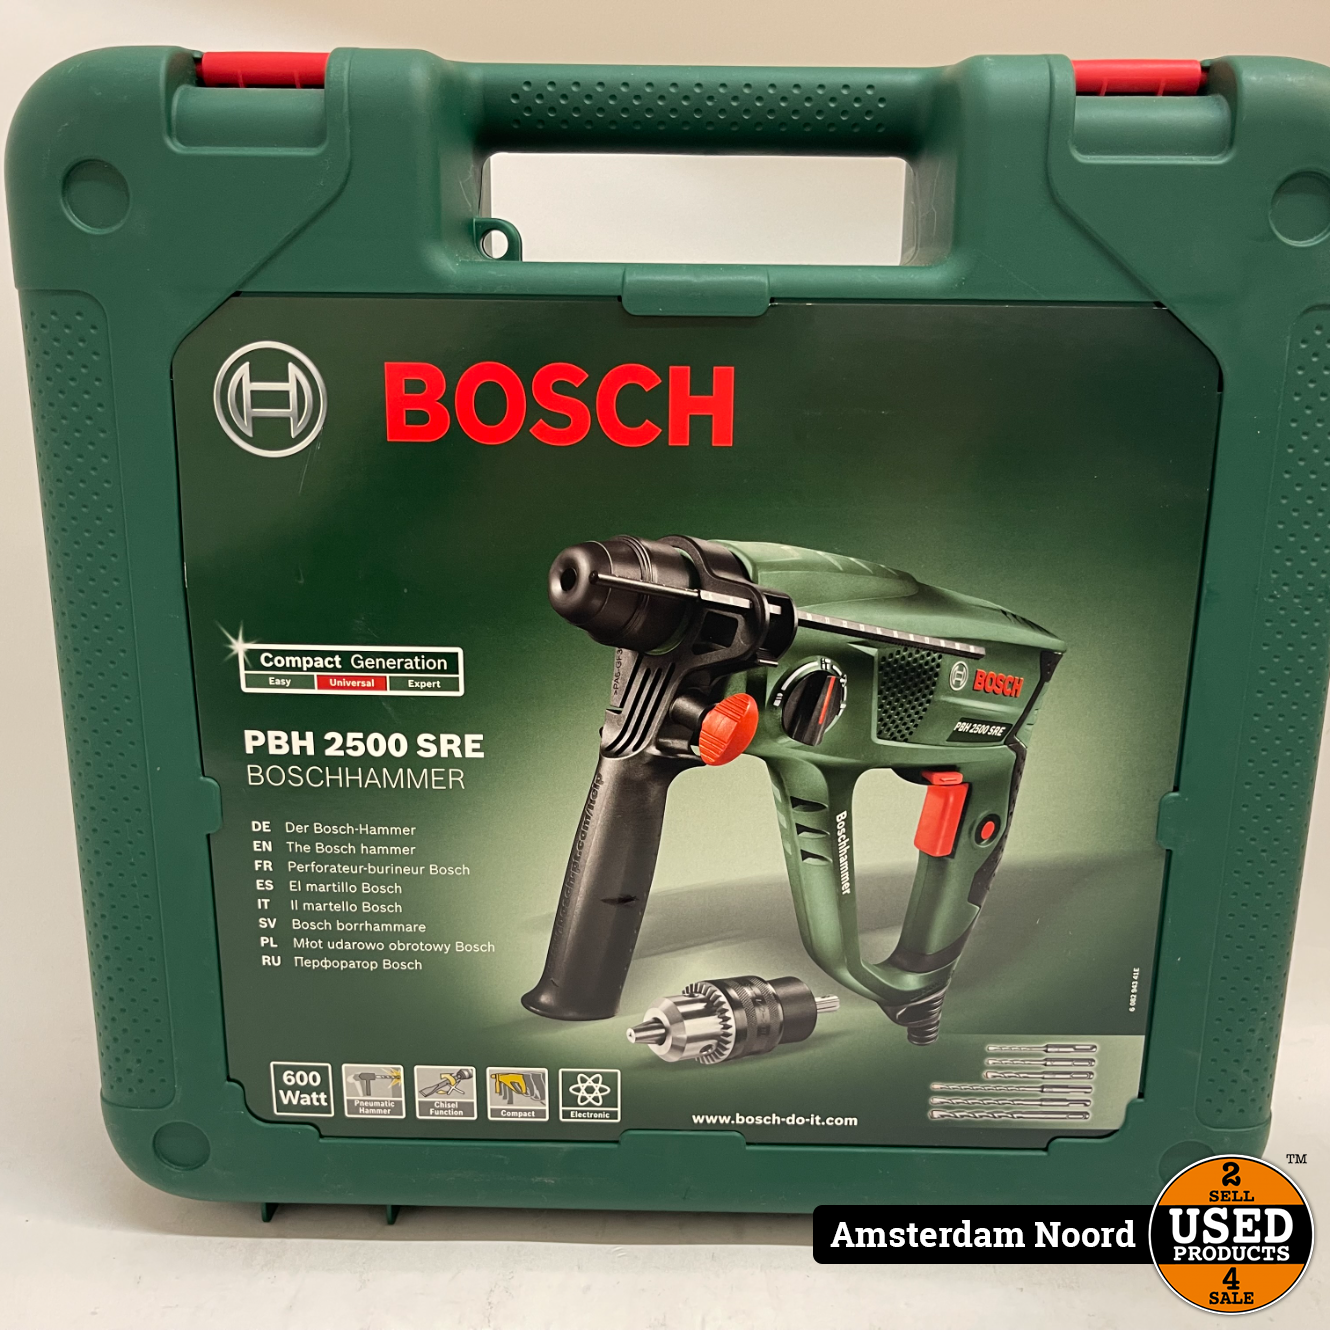 Bosch PBH 2500 SRE Boorhamer Products Amsterdam Noord